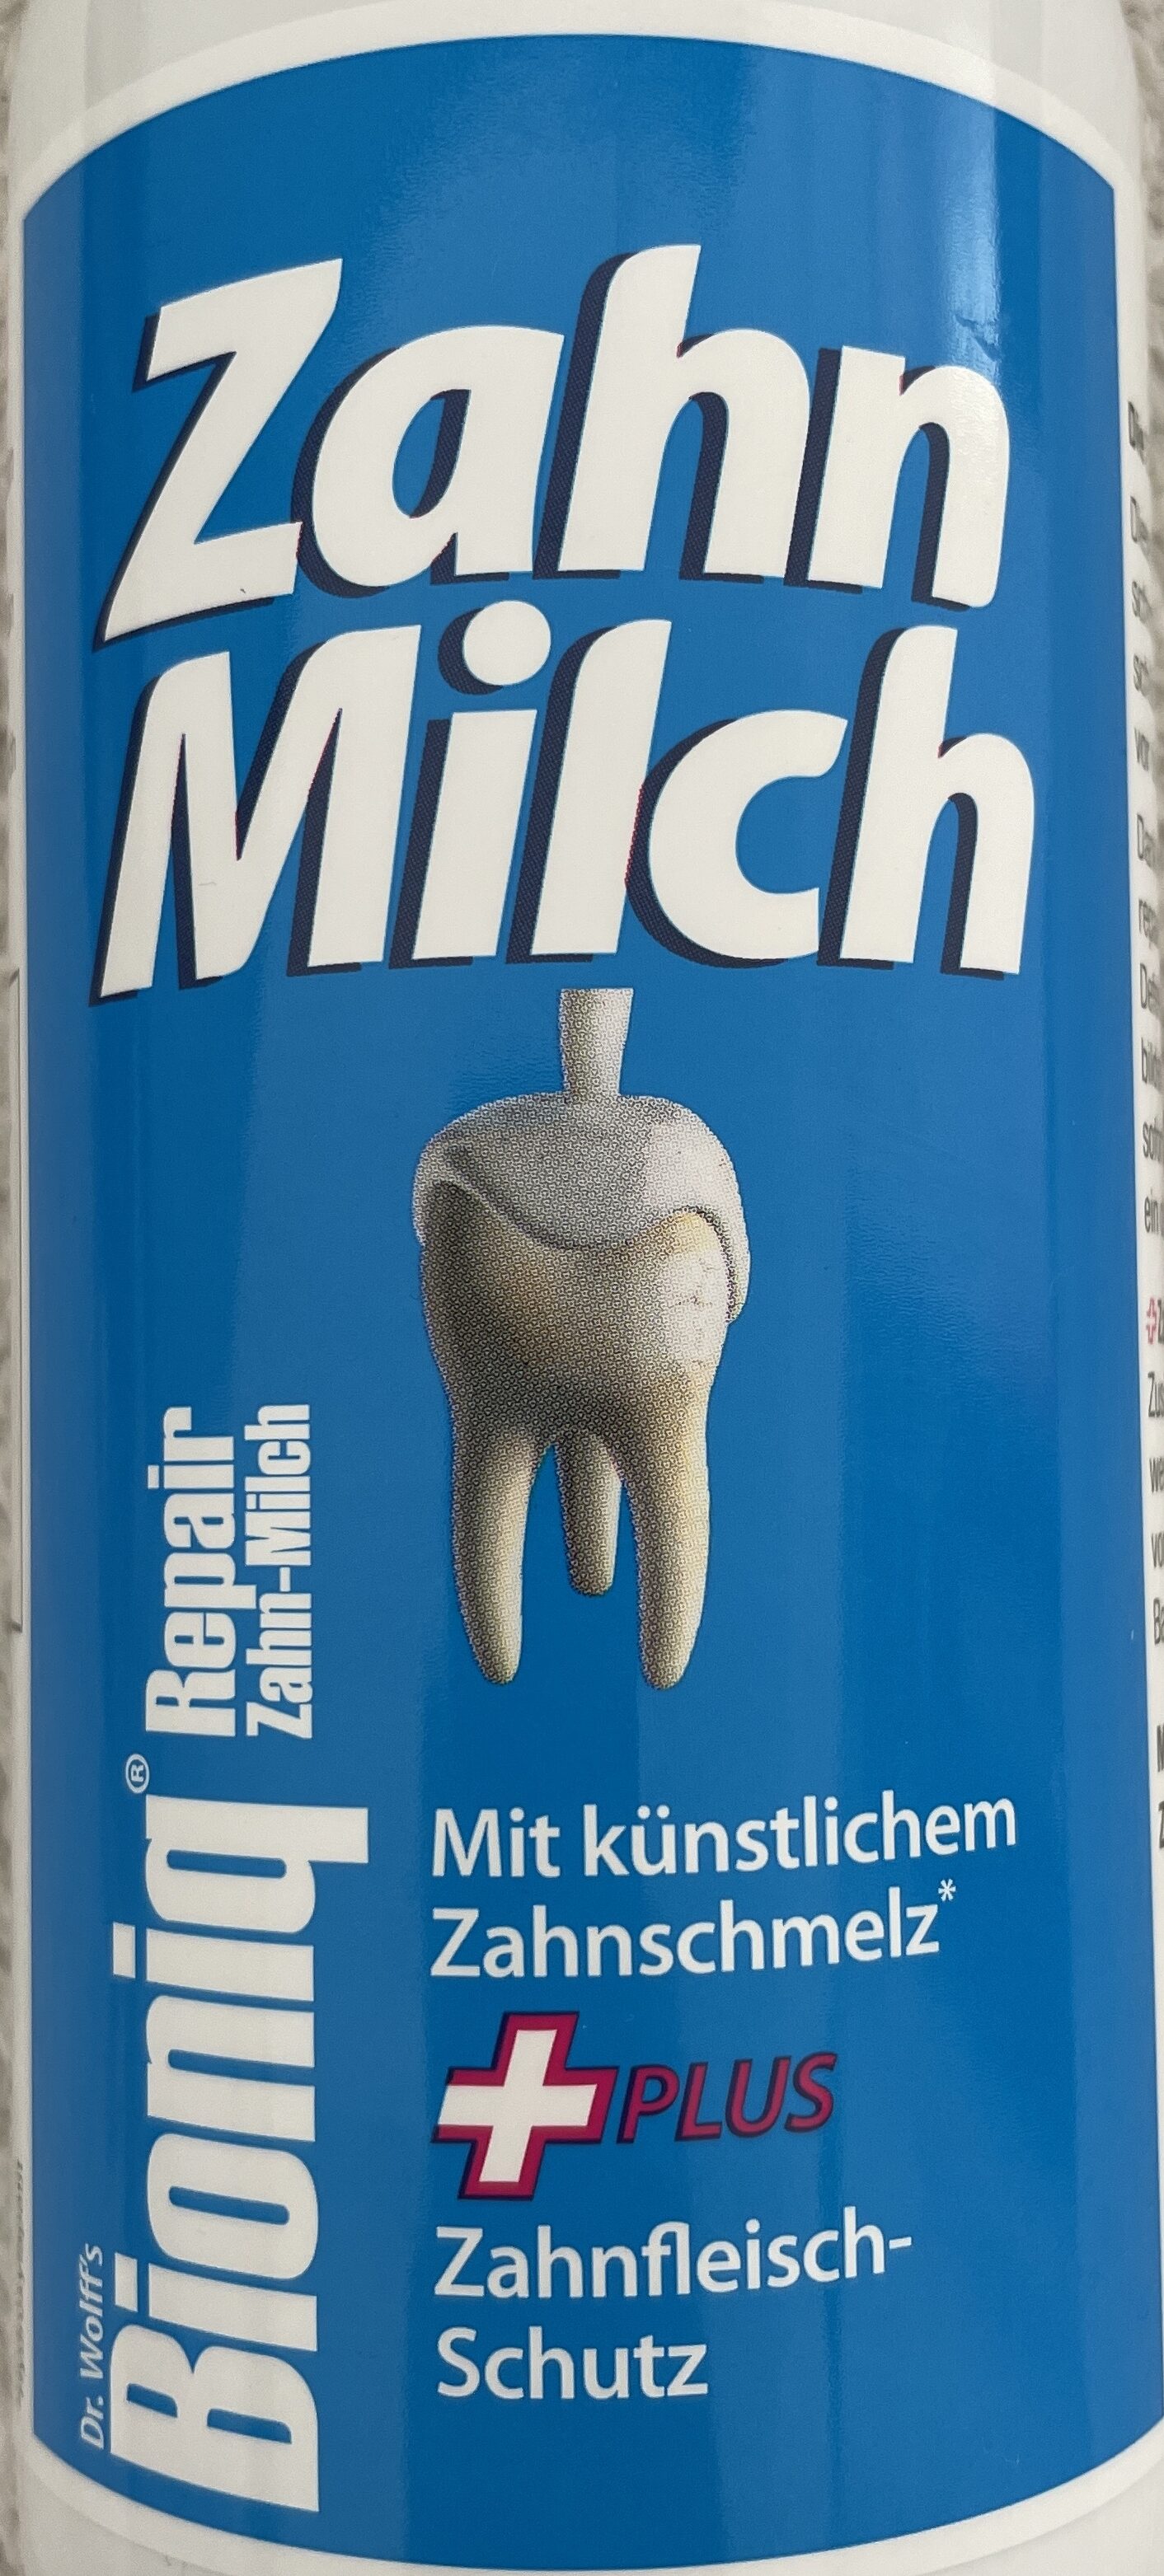 Repair Zahn-Milch - Produit - de